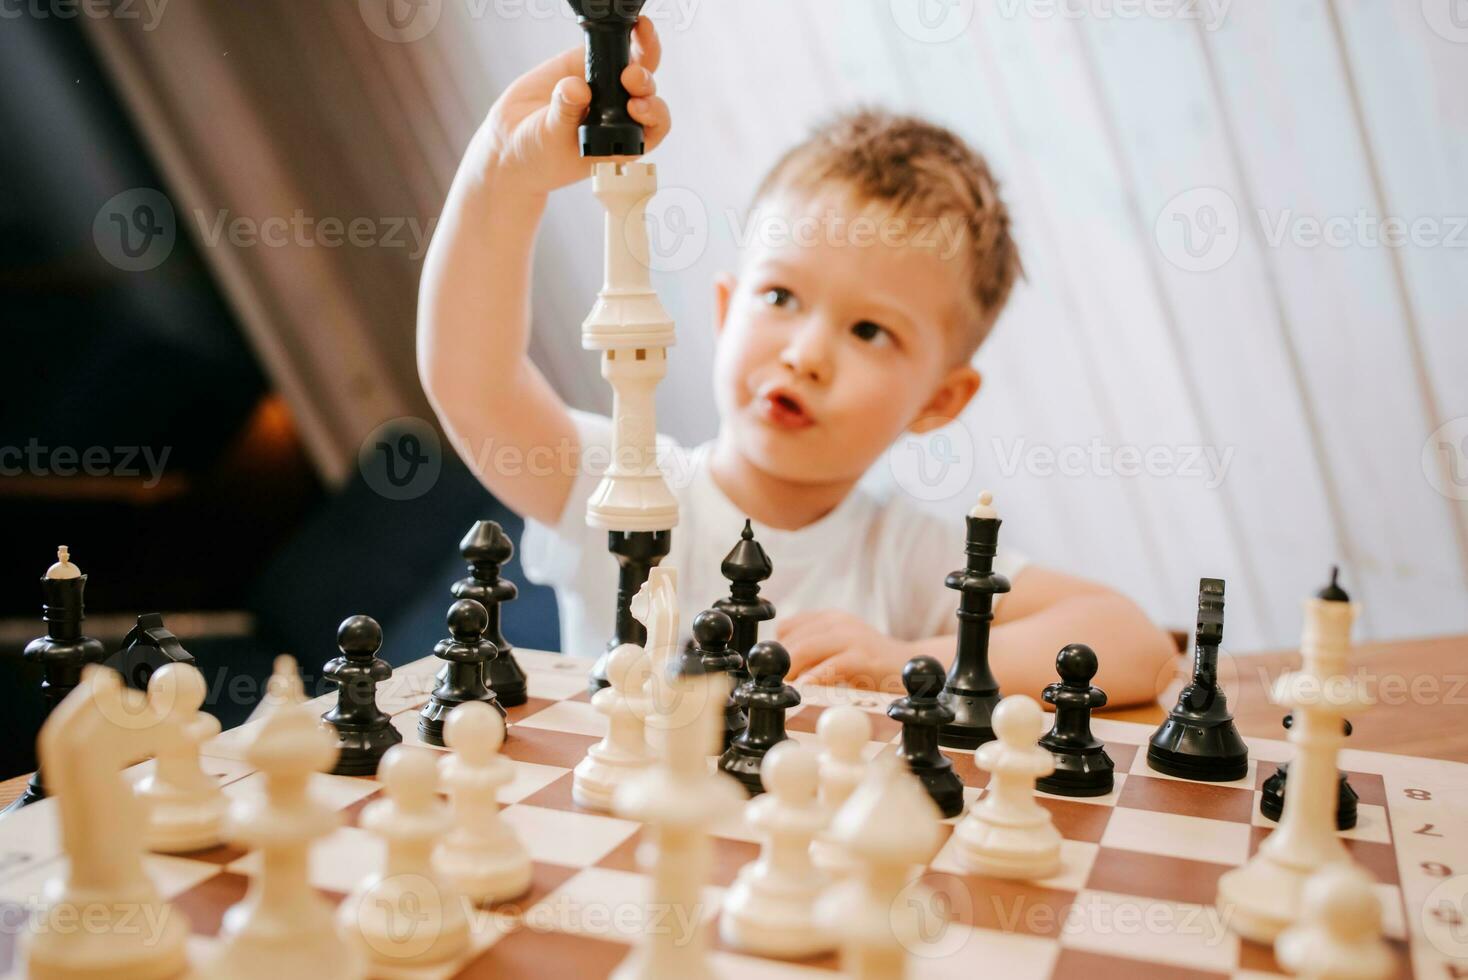 criança jogando xadrez às casa às a mesa foto